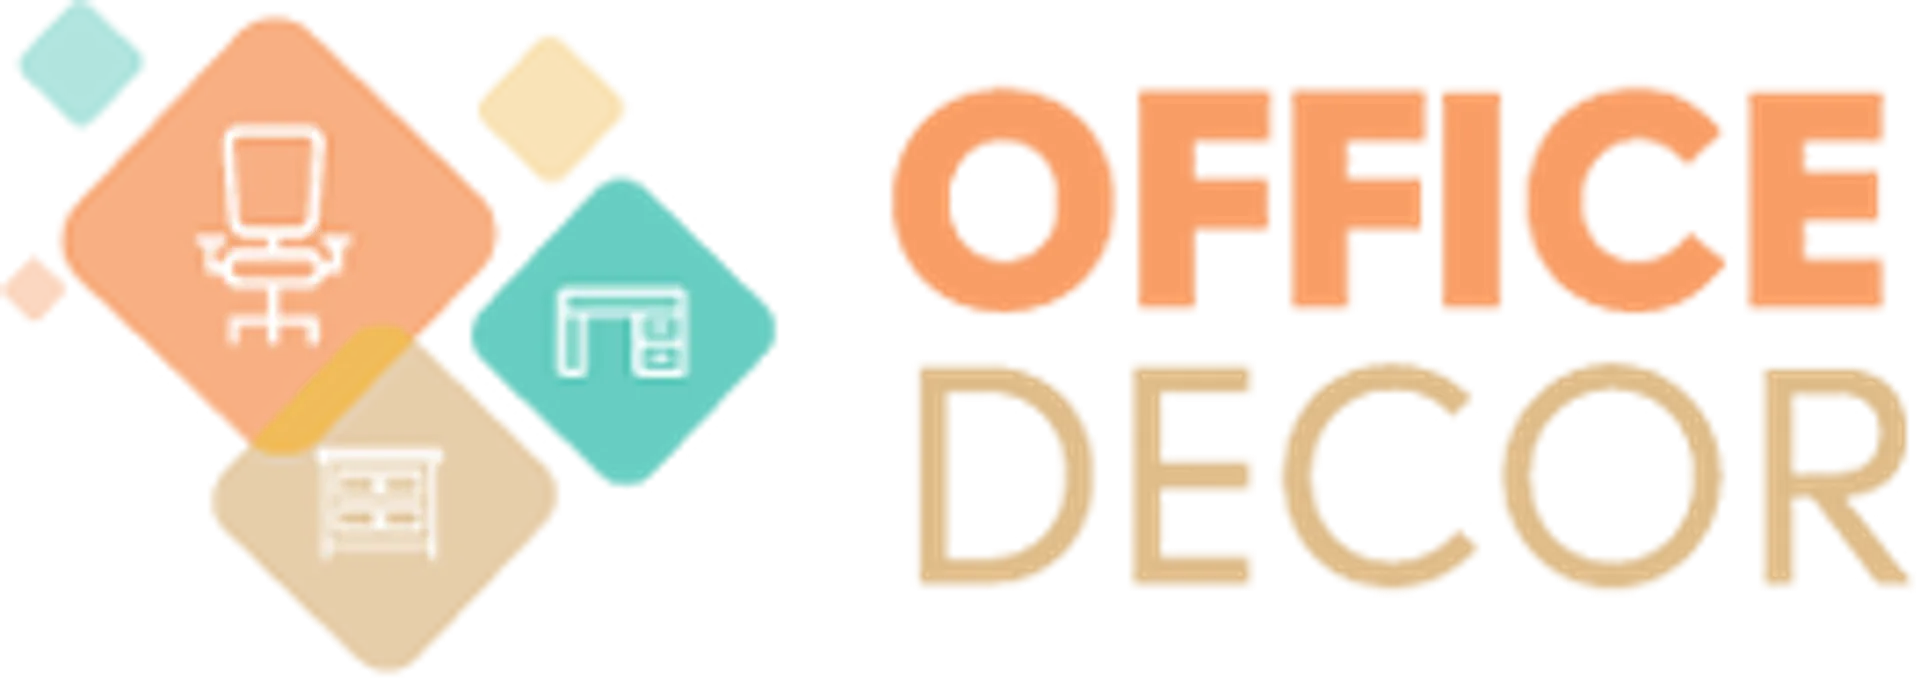 OFFICE DECOR logo